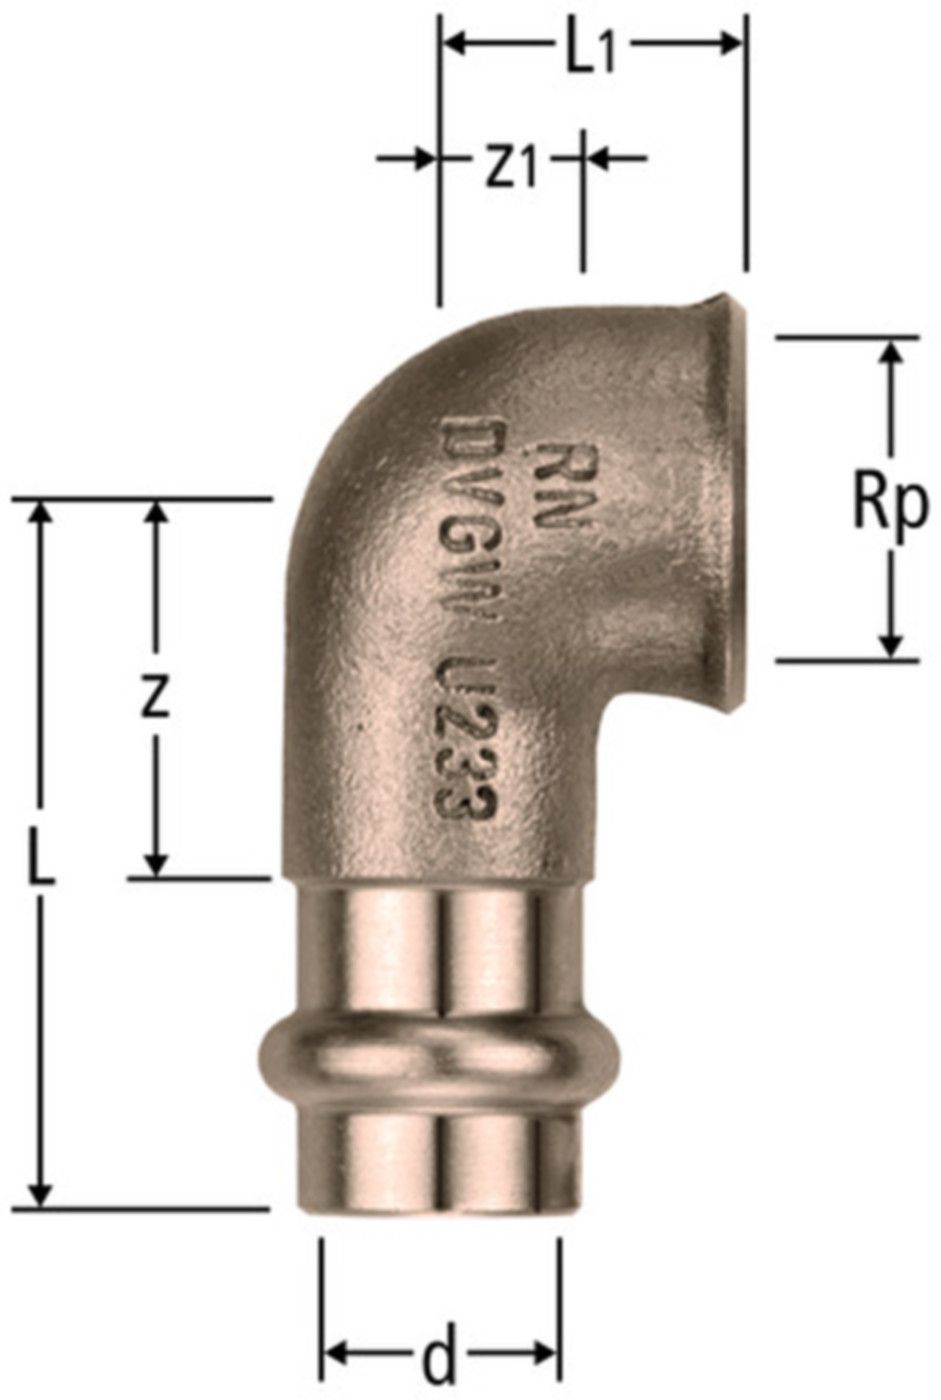 Winkel mit IG 18 x 1/2" 81006.23 - Nussbaum-Optipress-Rotguss-Fittings